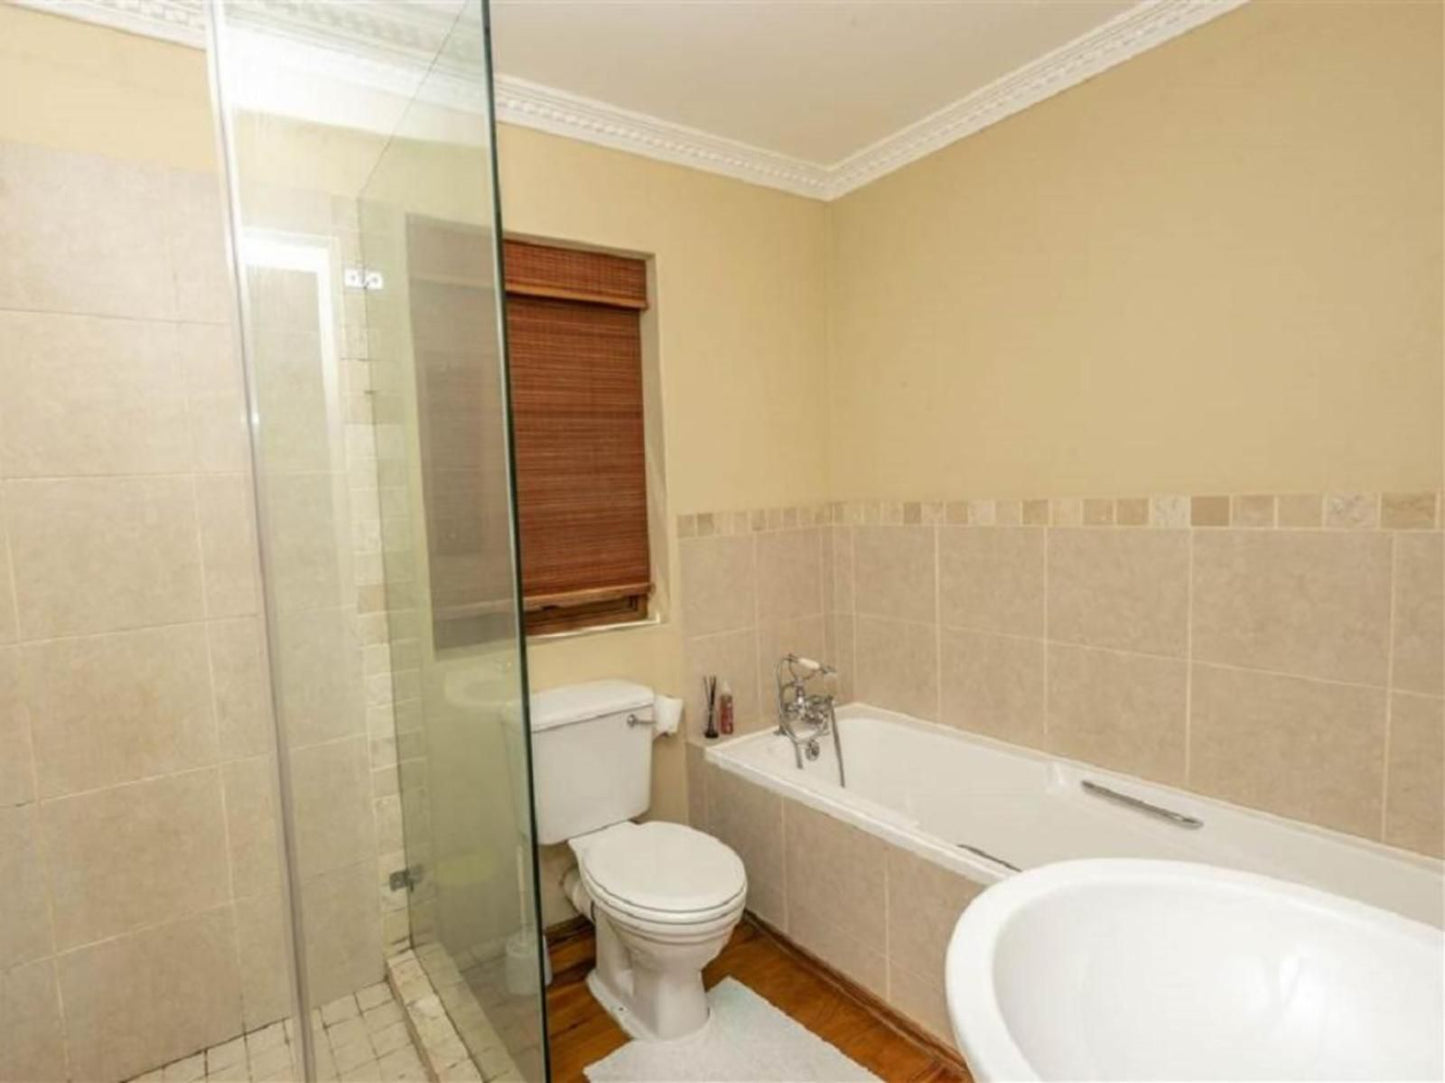 10 Villefranche Franschhoek Western Cape South Africa Sepia Tones, Bathroom